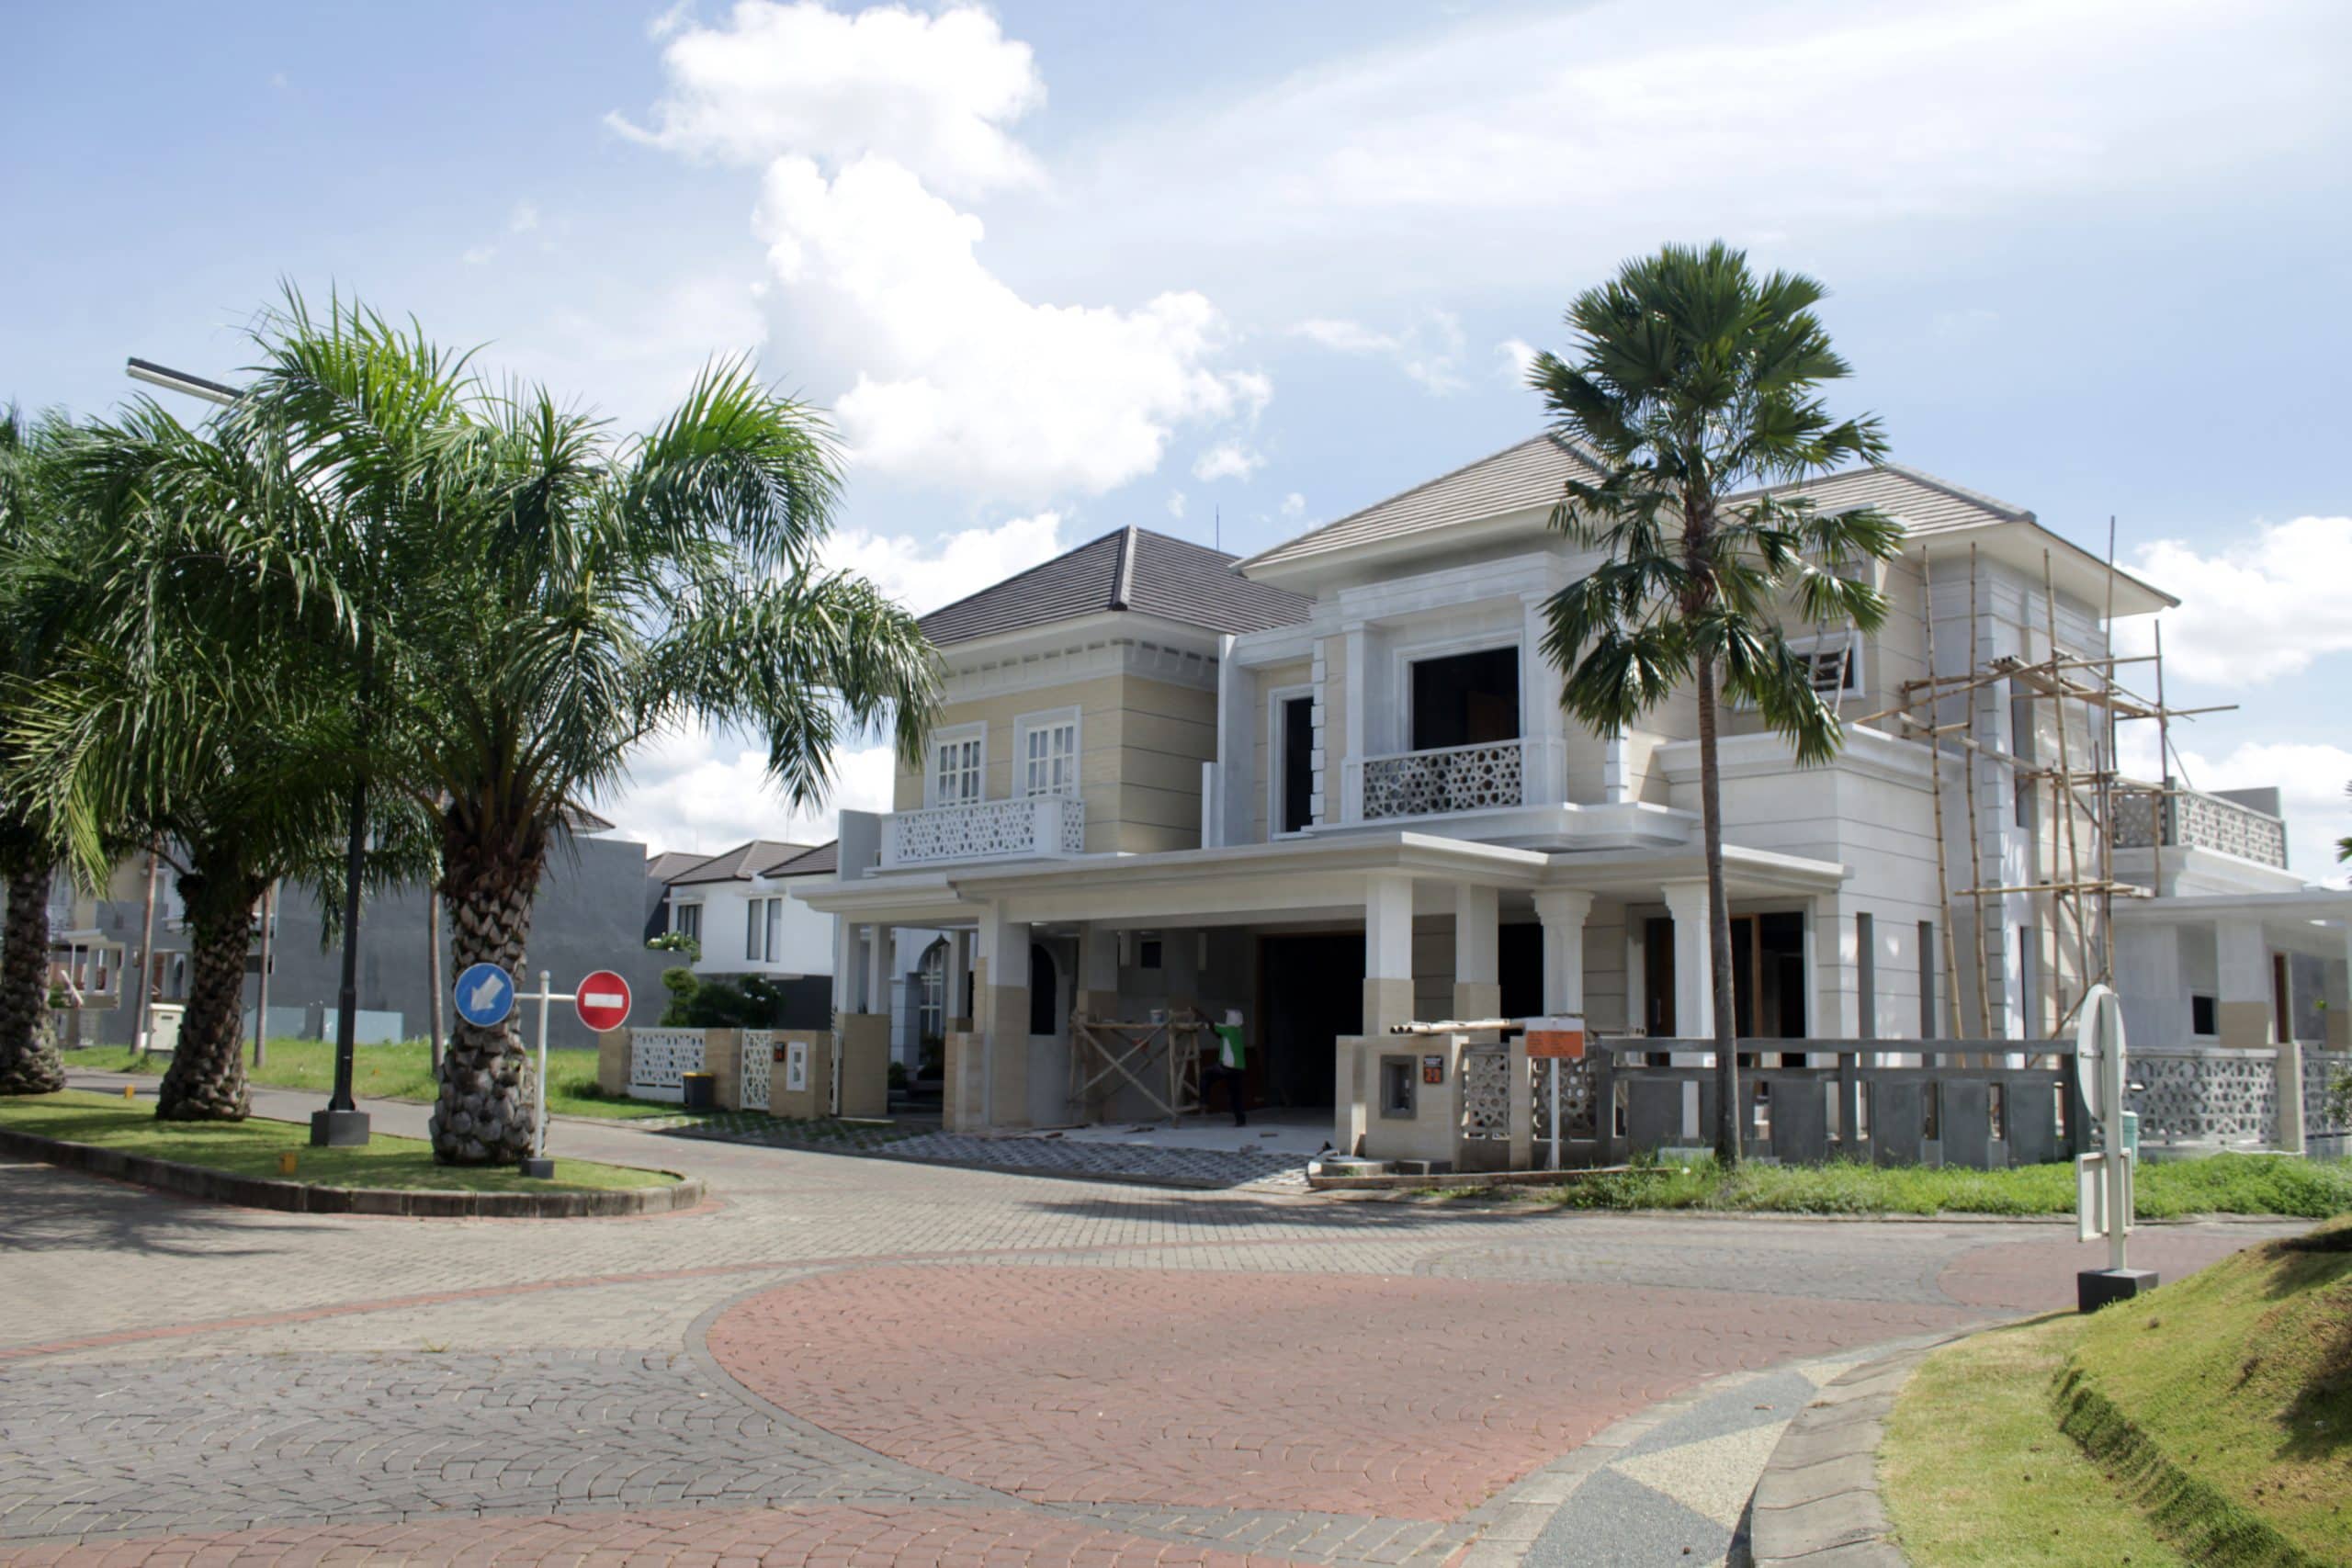 variations of residential design in the tropics, location Sawojajar, Malang, East Java, Indonesia (Malang, 10 December 2020)